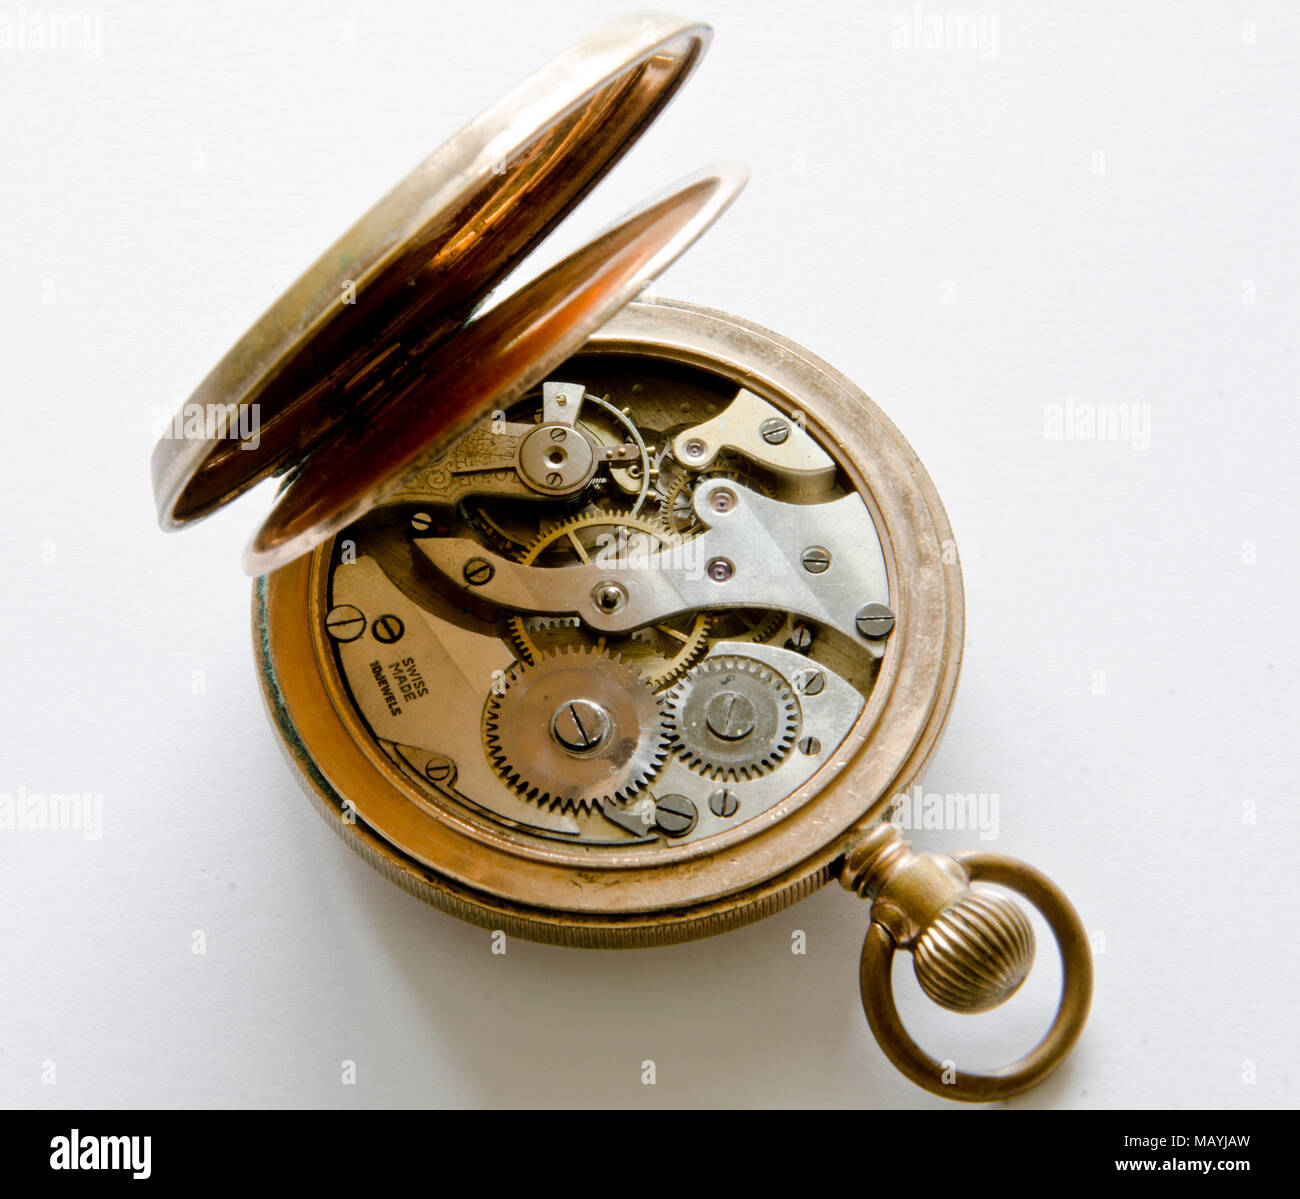 Reloj de bolsillo mecánico fotografías e imágenes de alta - Alamy